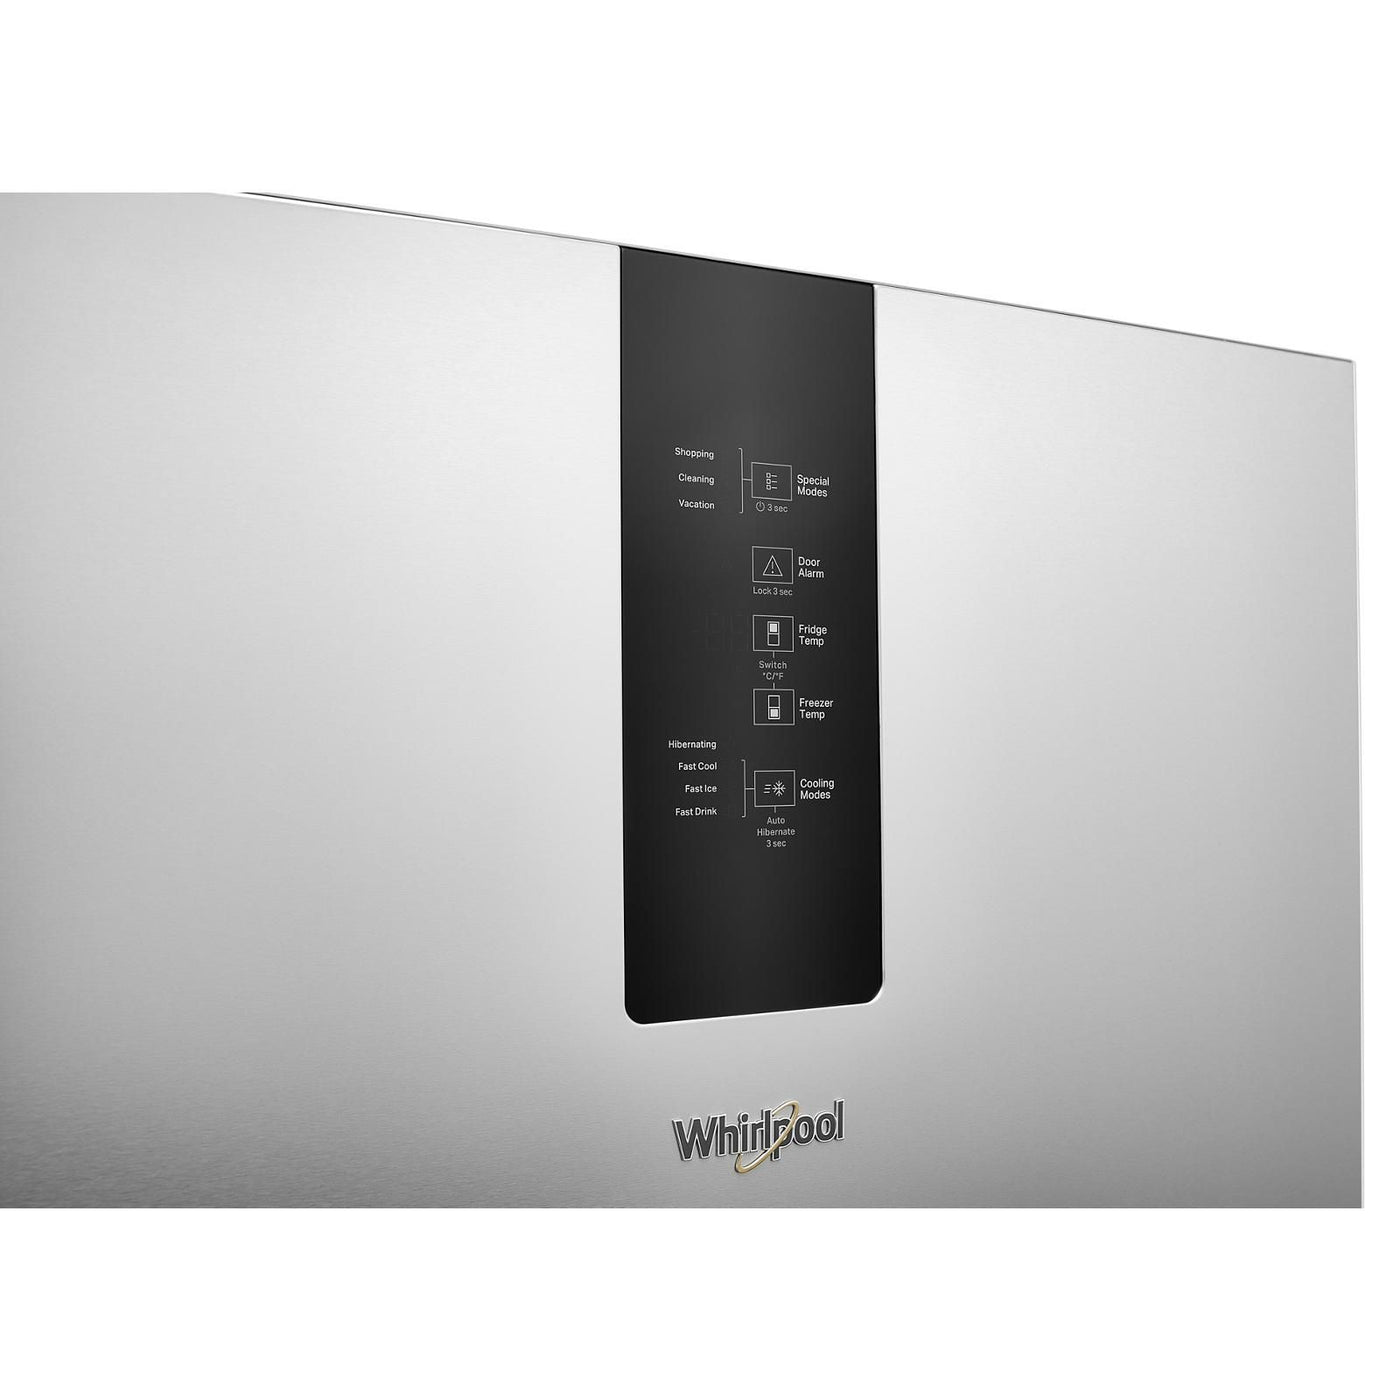 Whirlpool Fingerprint Resistant Stainless Steel Bottom Freezer Refrigerator (12.7 Cu.Ft.) - WRB543CMJZ